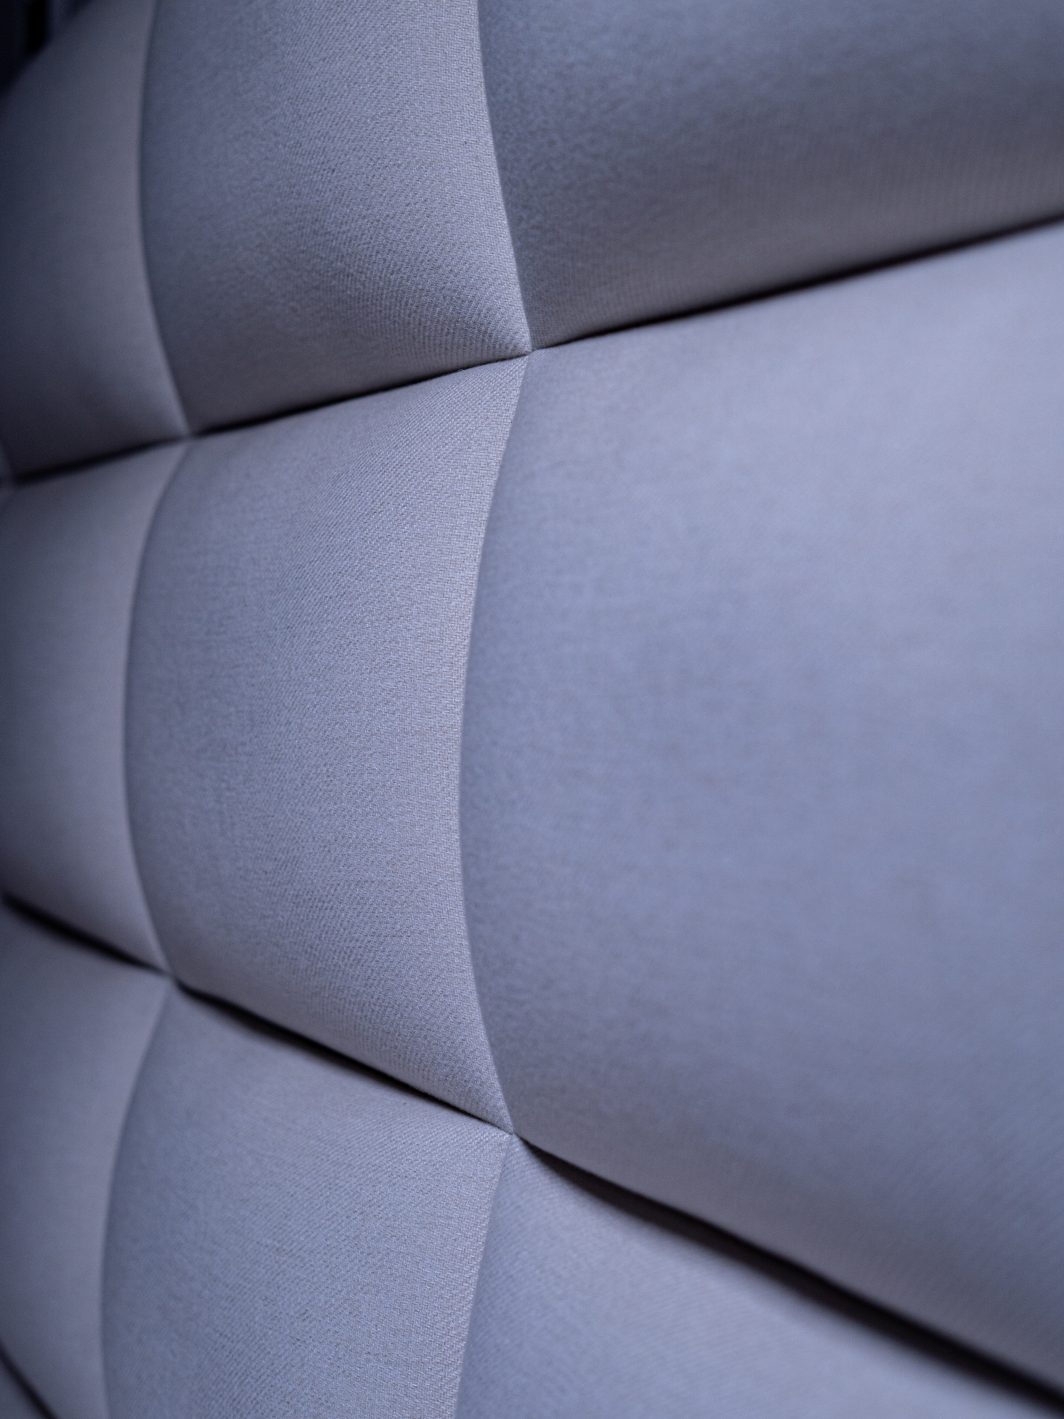 Restonic comfort mattress in Dubai